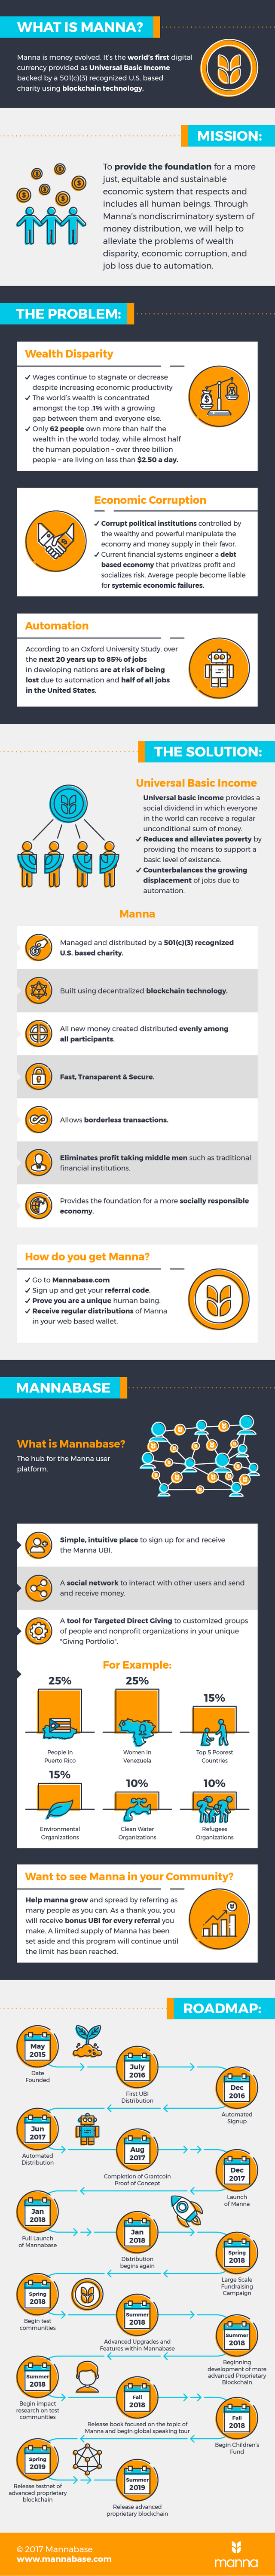 MANNA Infographic